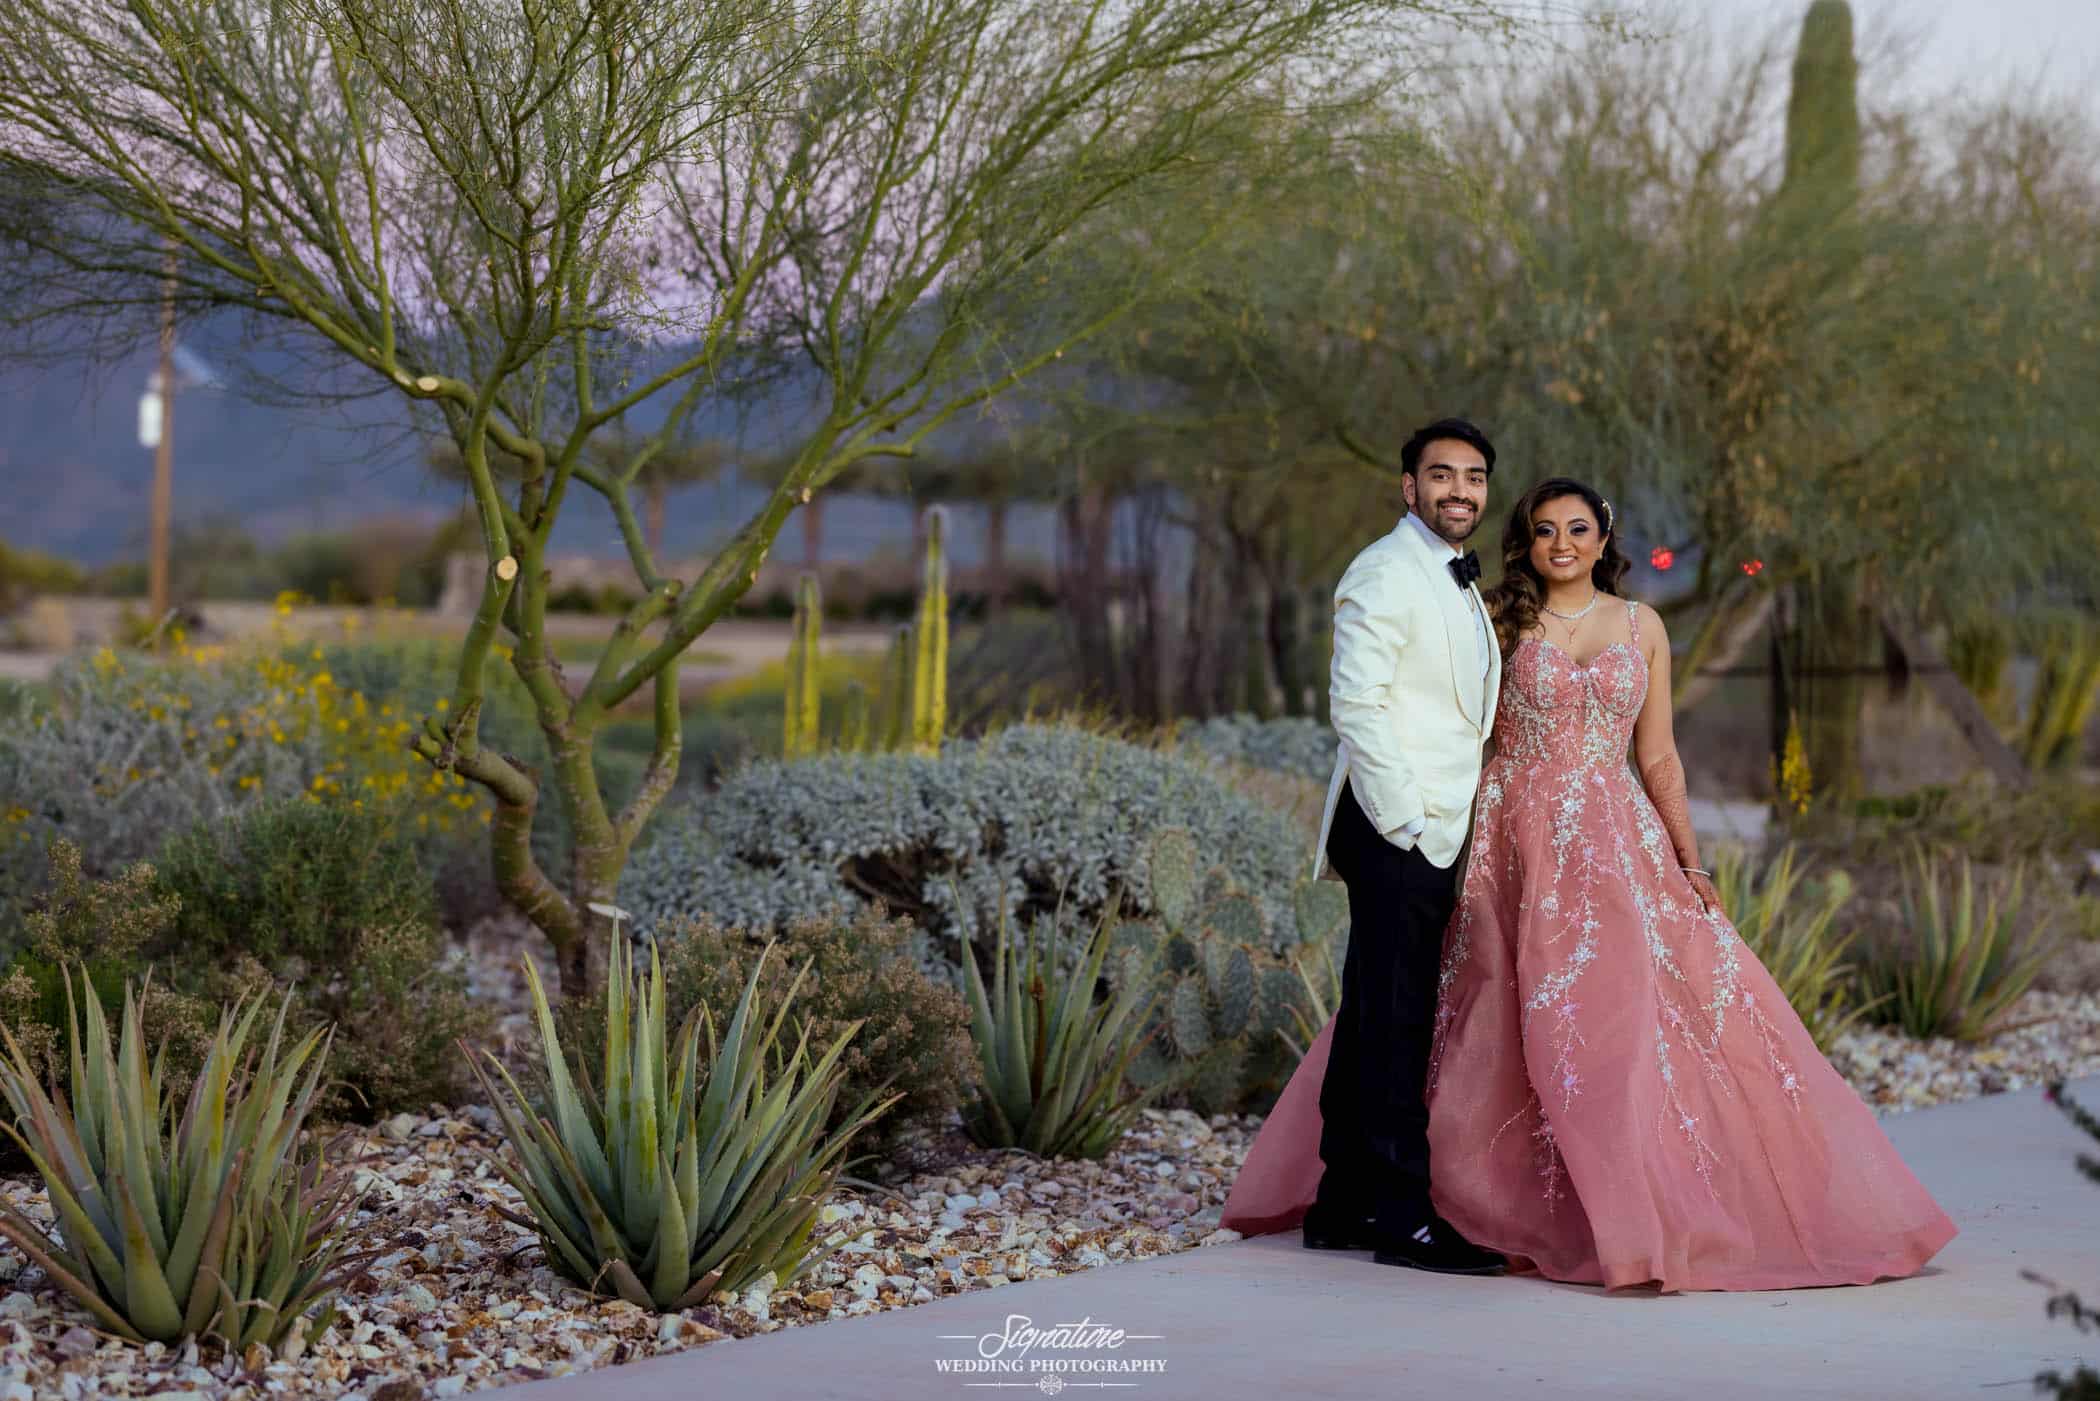 Bride and groom in front of desert plants